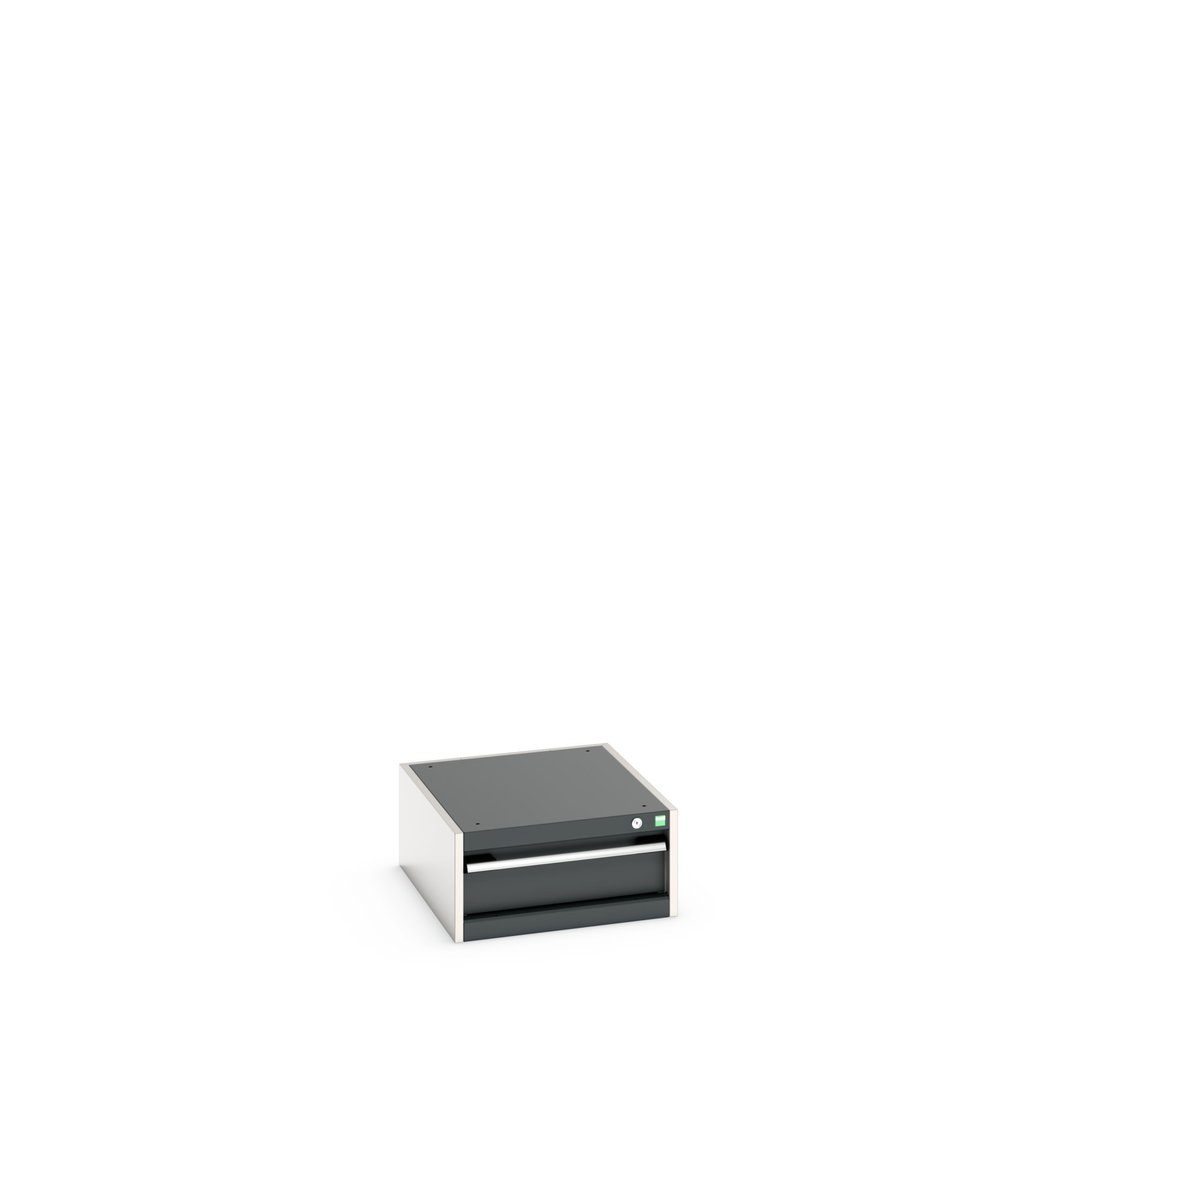 40018001. - cubio drawer cabinet